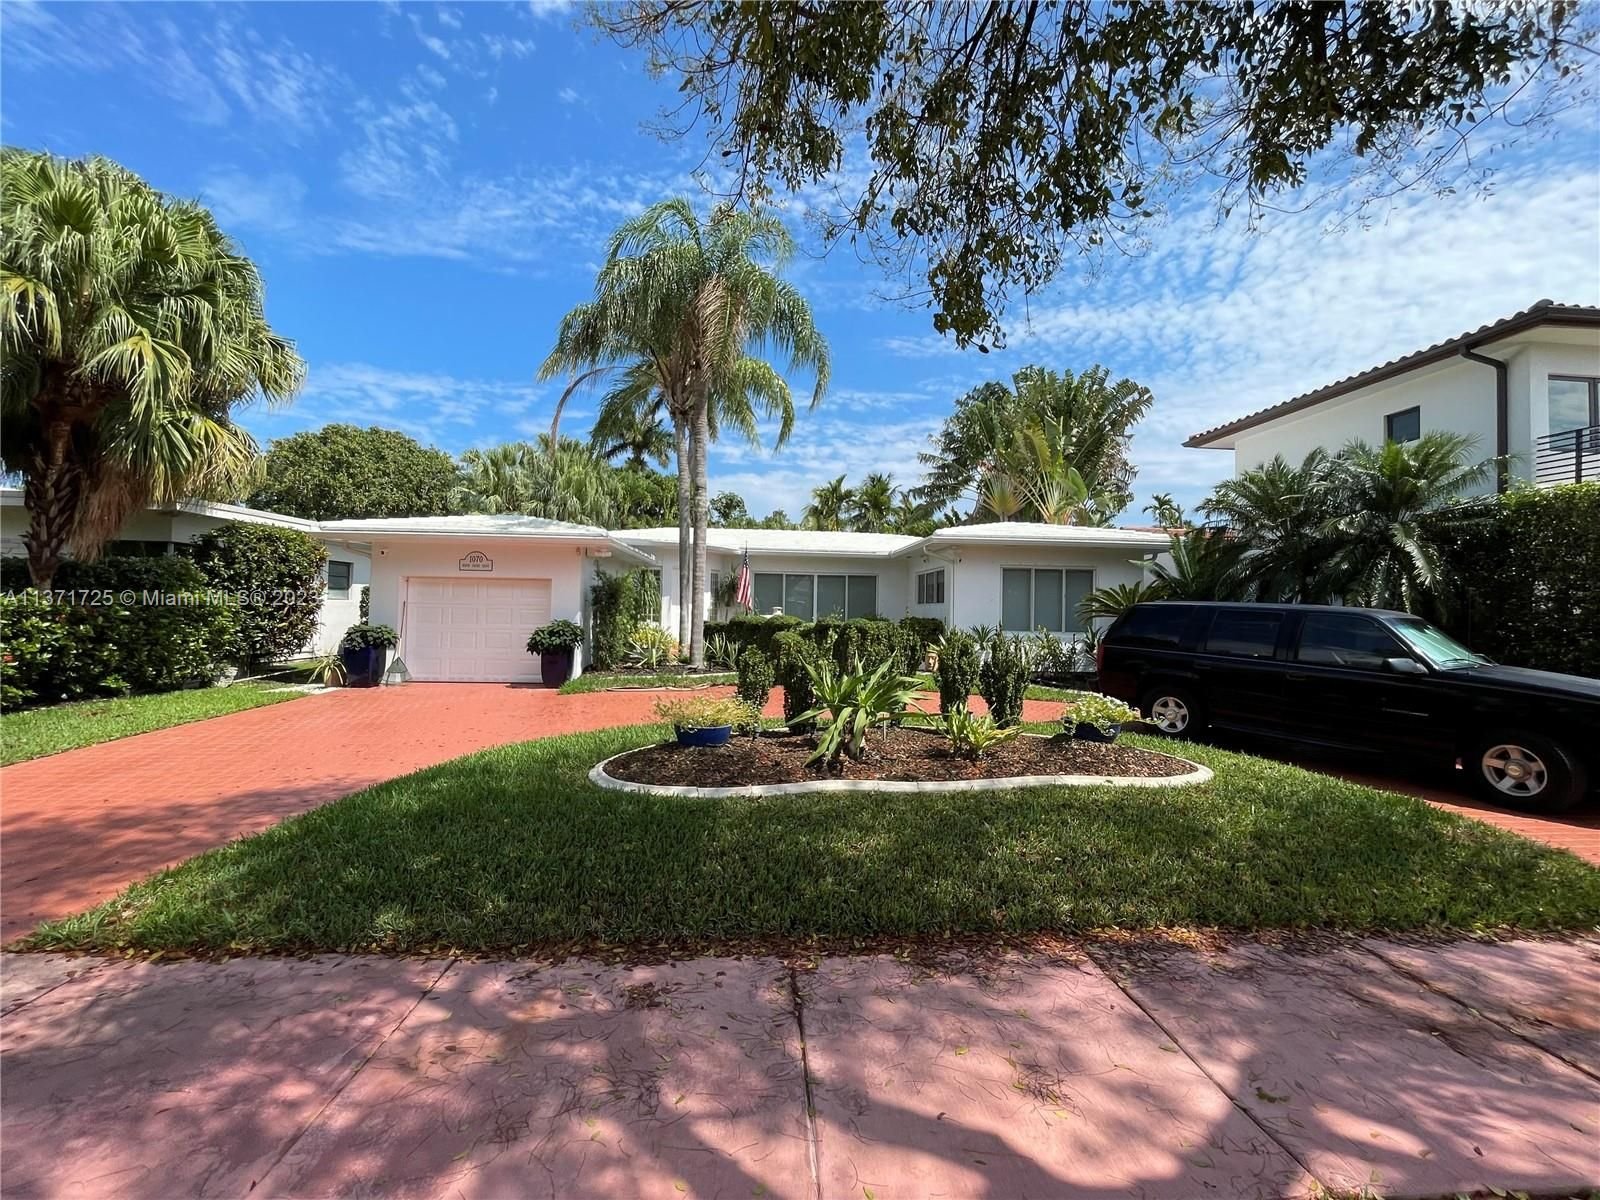 Real estate property located at 1070 Shore Dr, Miami-Dade County, Miami Beach, FL